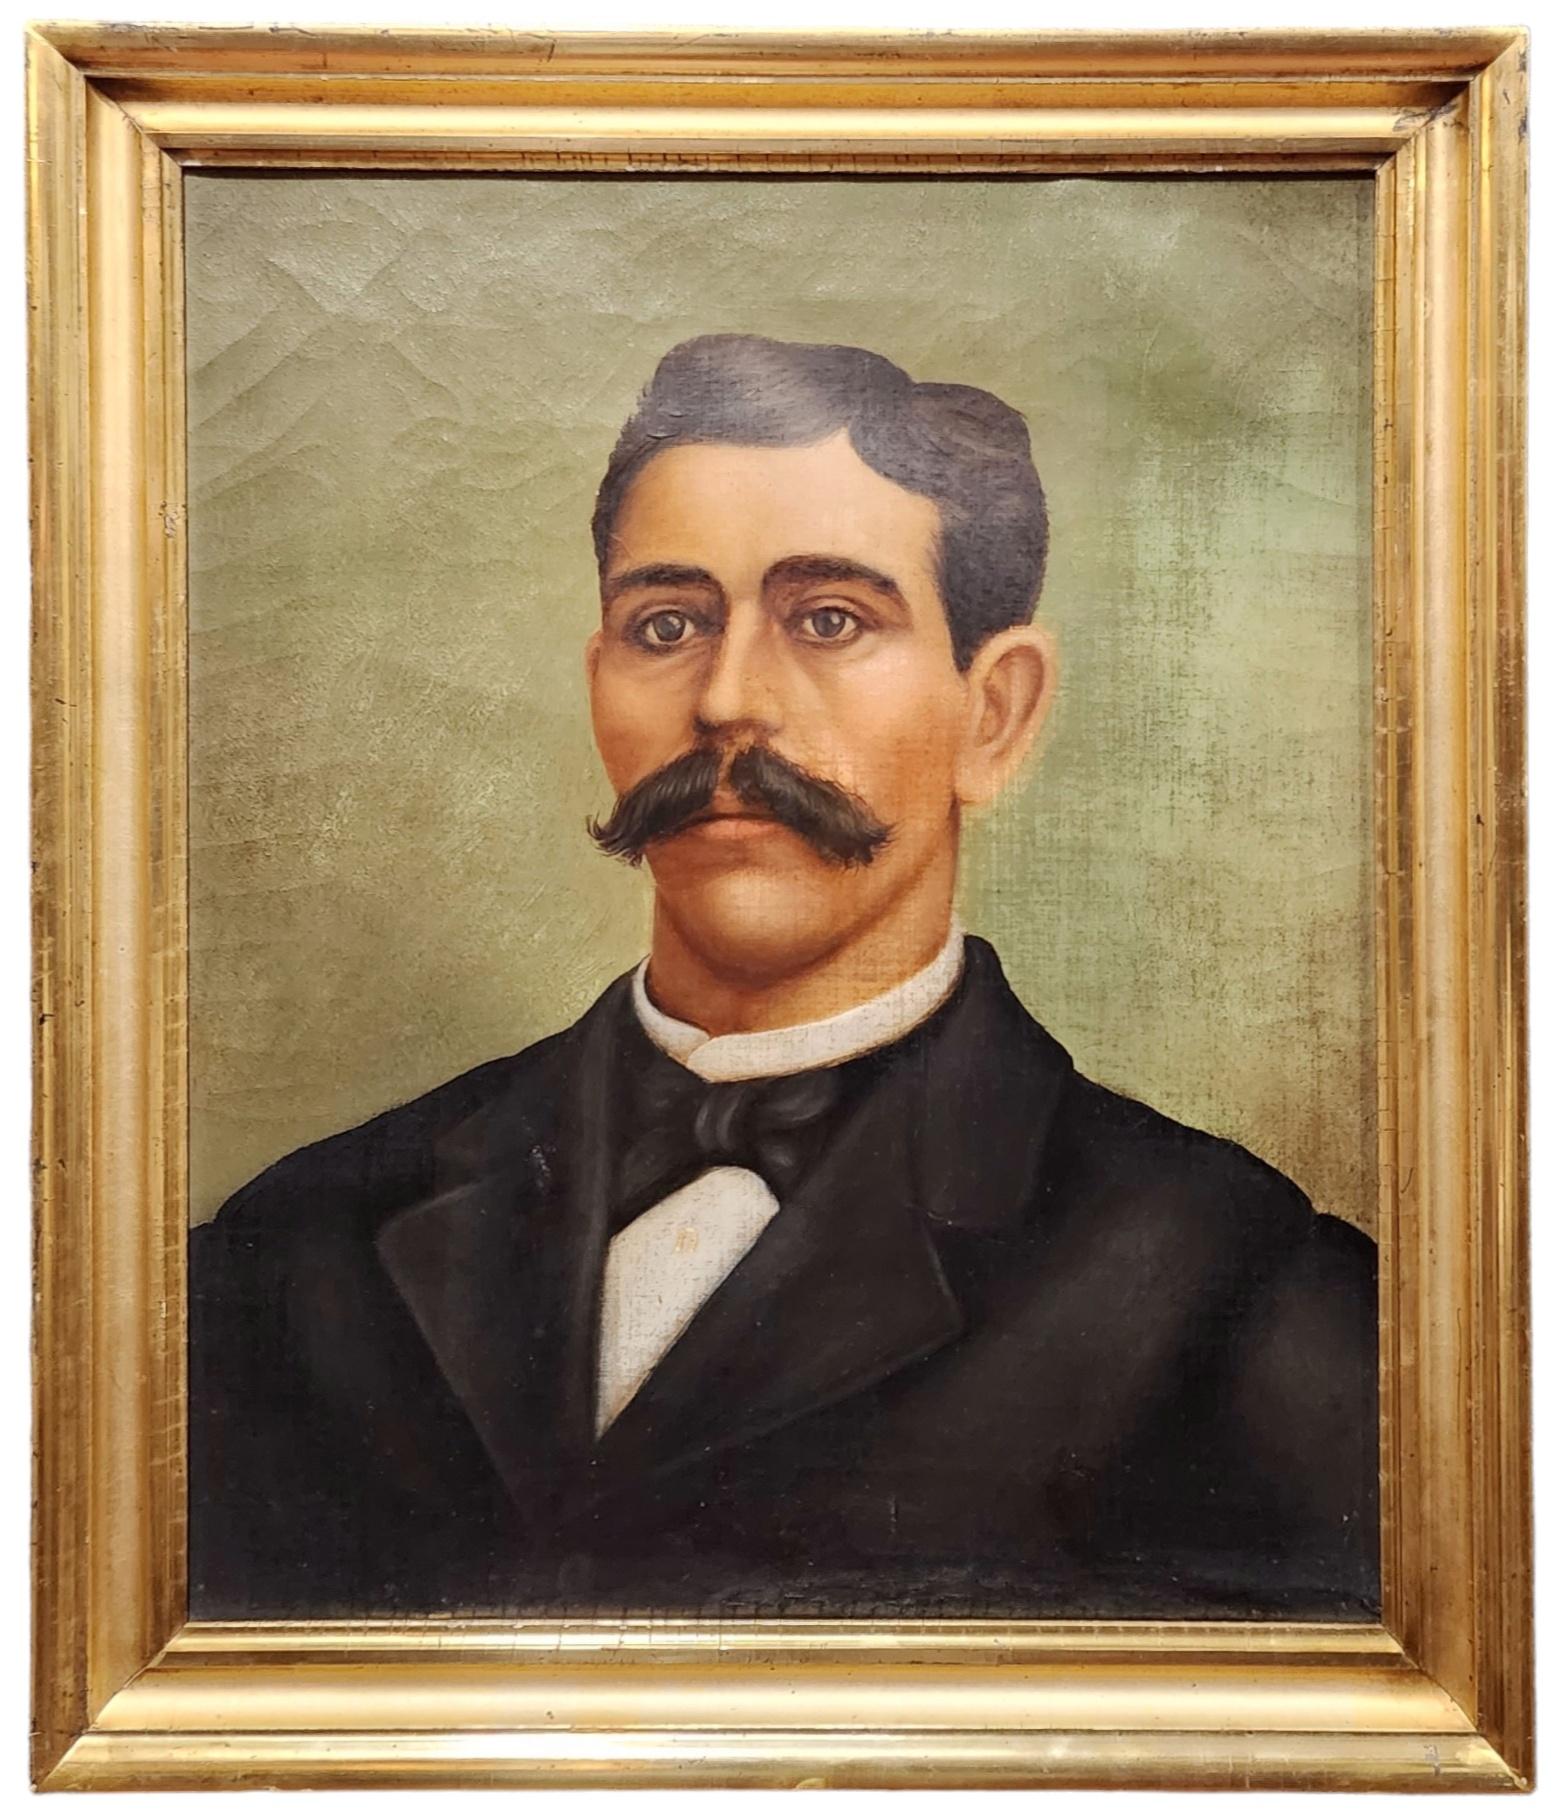 Unknown Portrait Painting - Portrait of a Horseman, Southern Gentleman, American Portrait Prominent Mustache